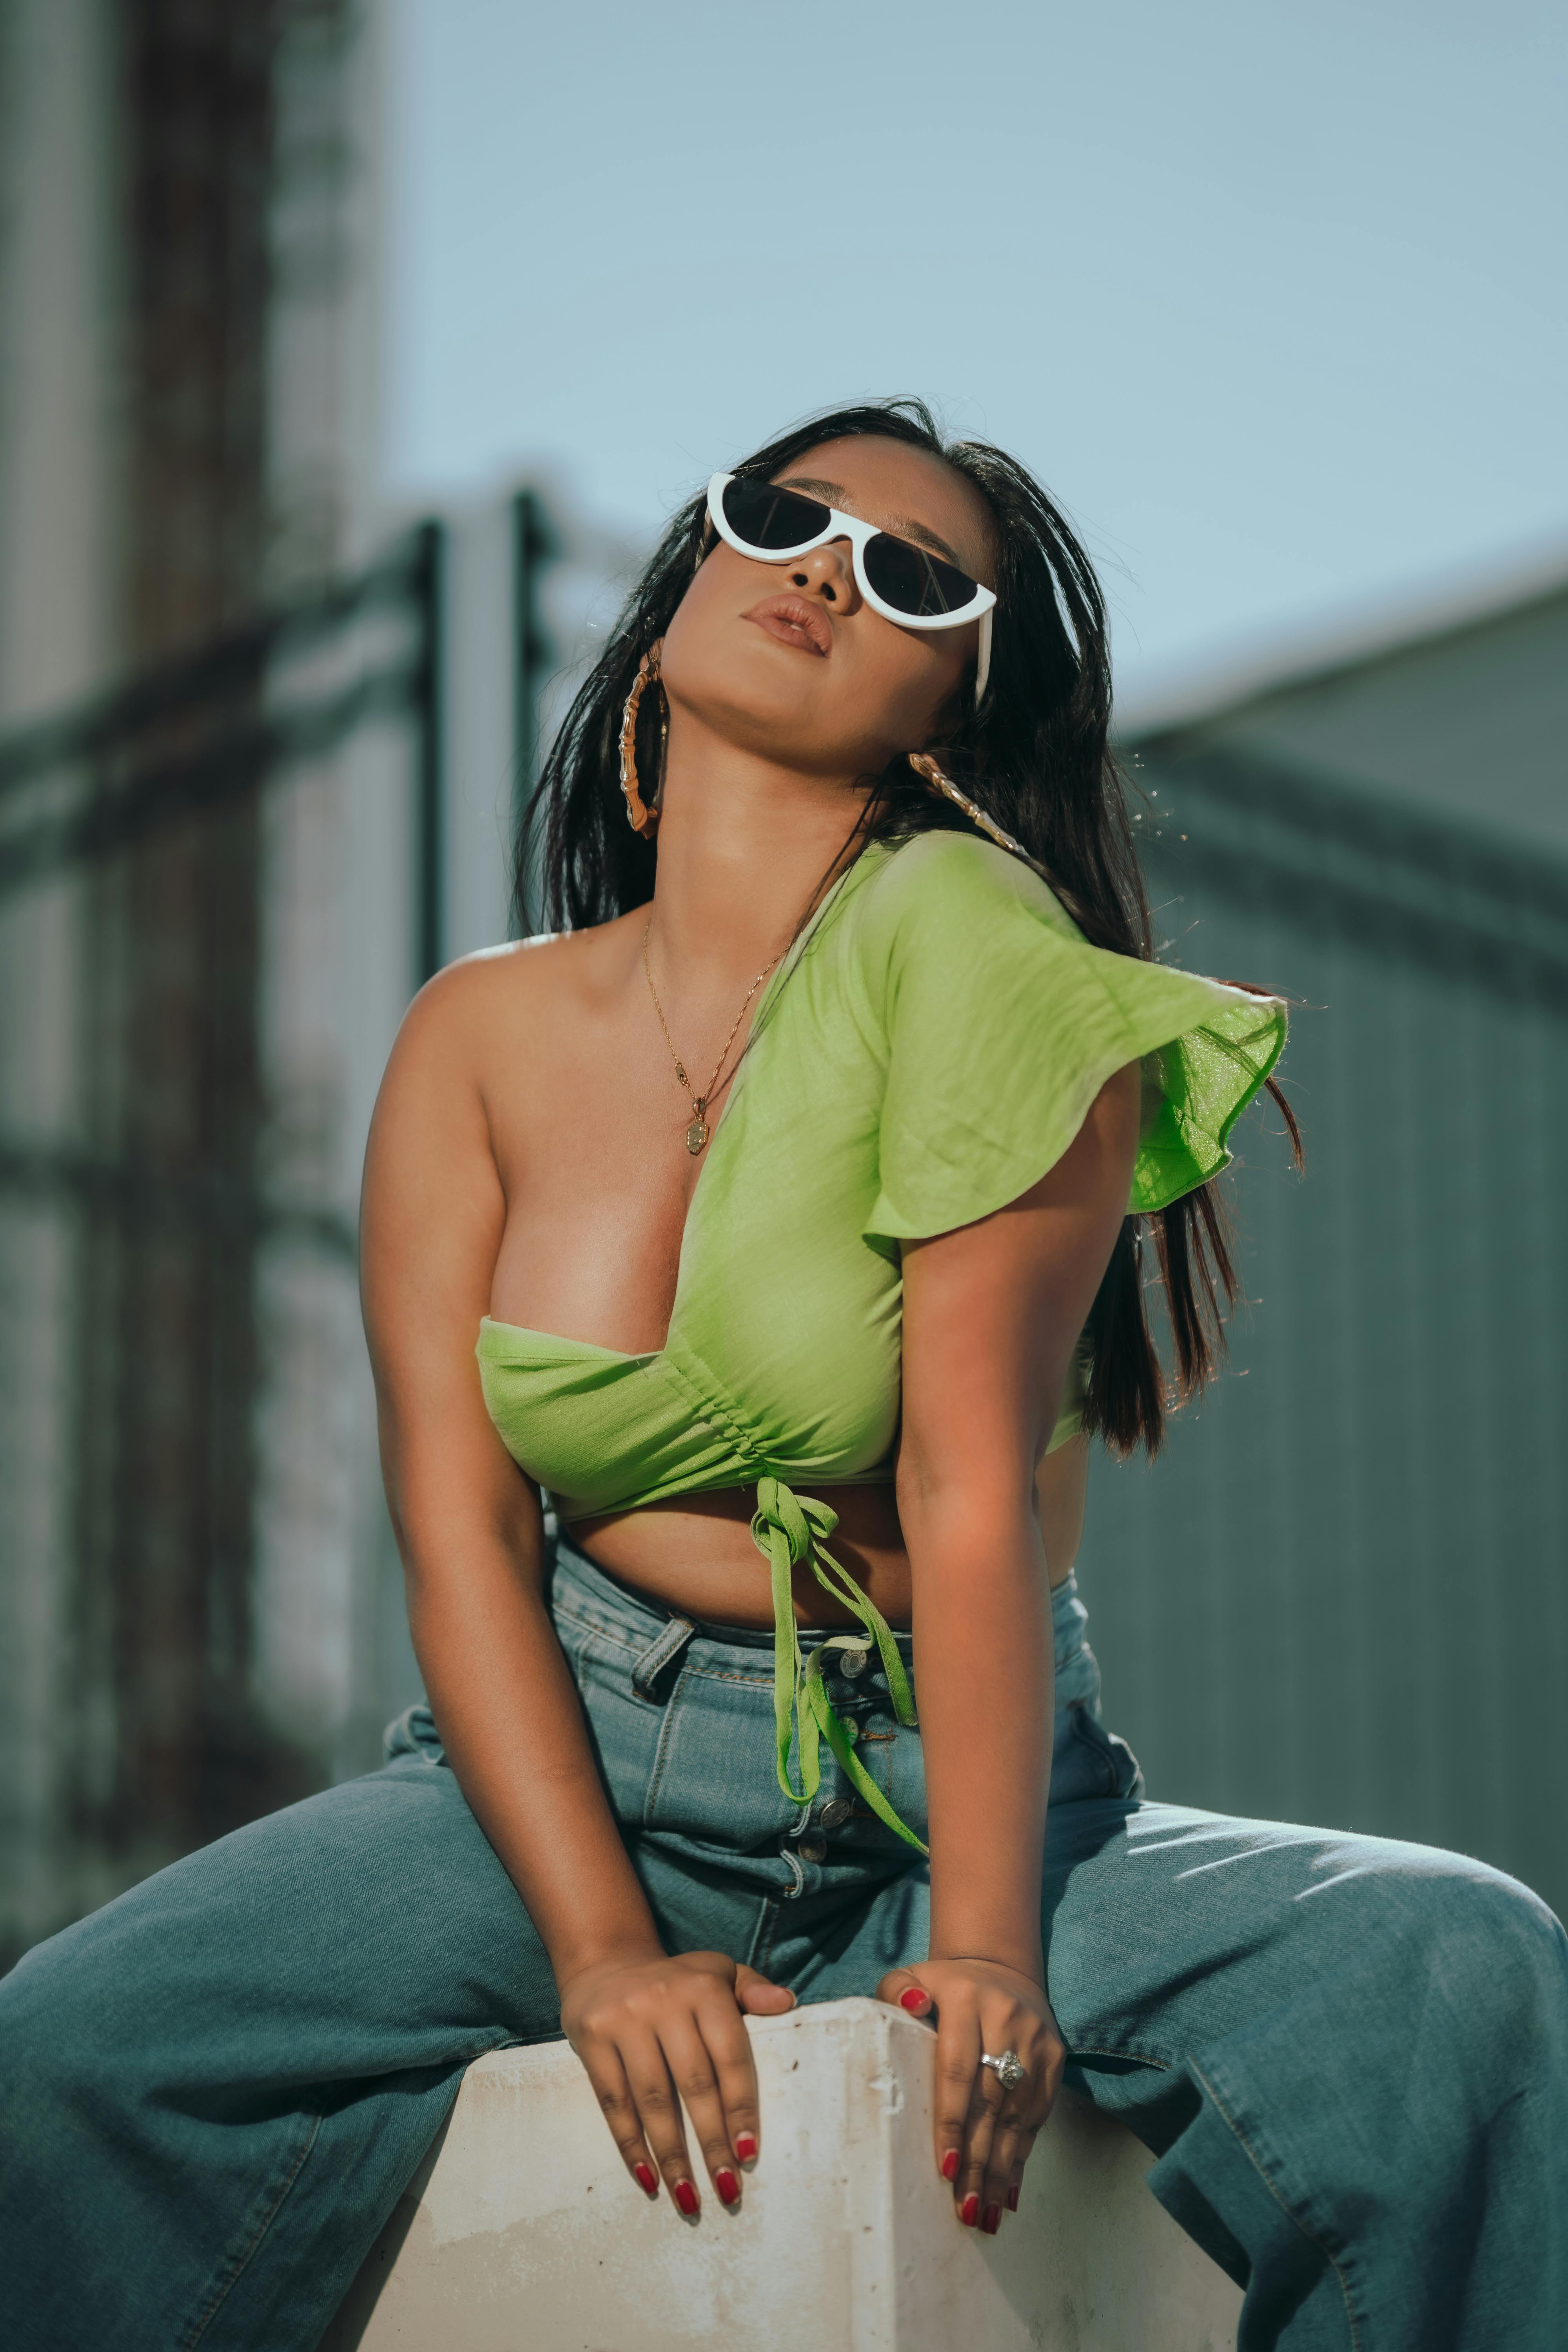 Woman Wearing Green Sexy Top · Free Stock Photo